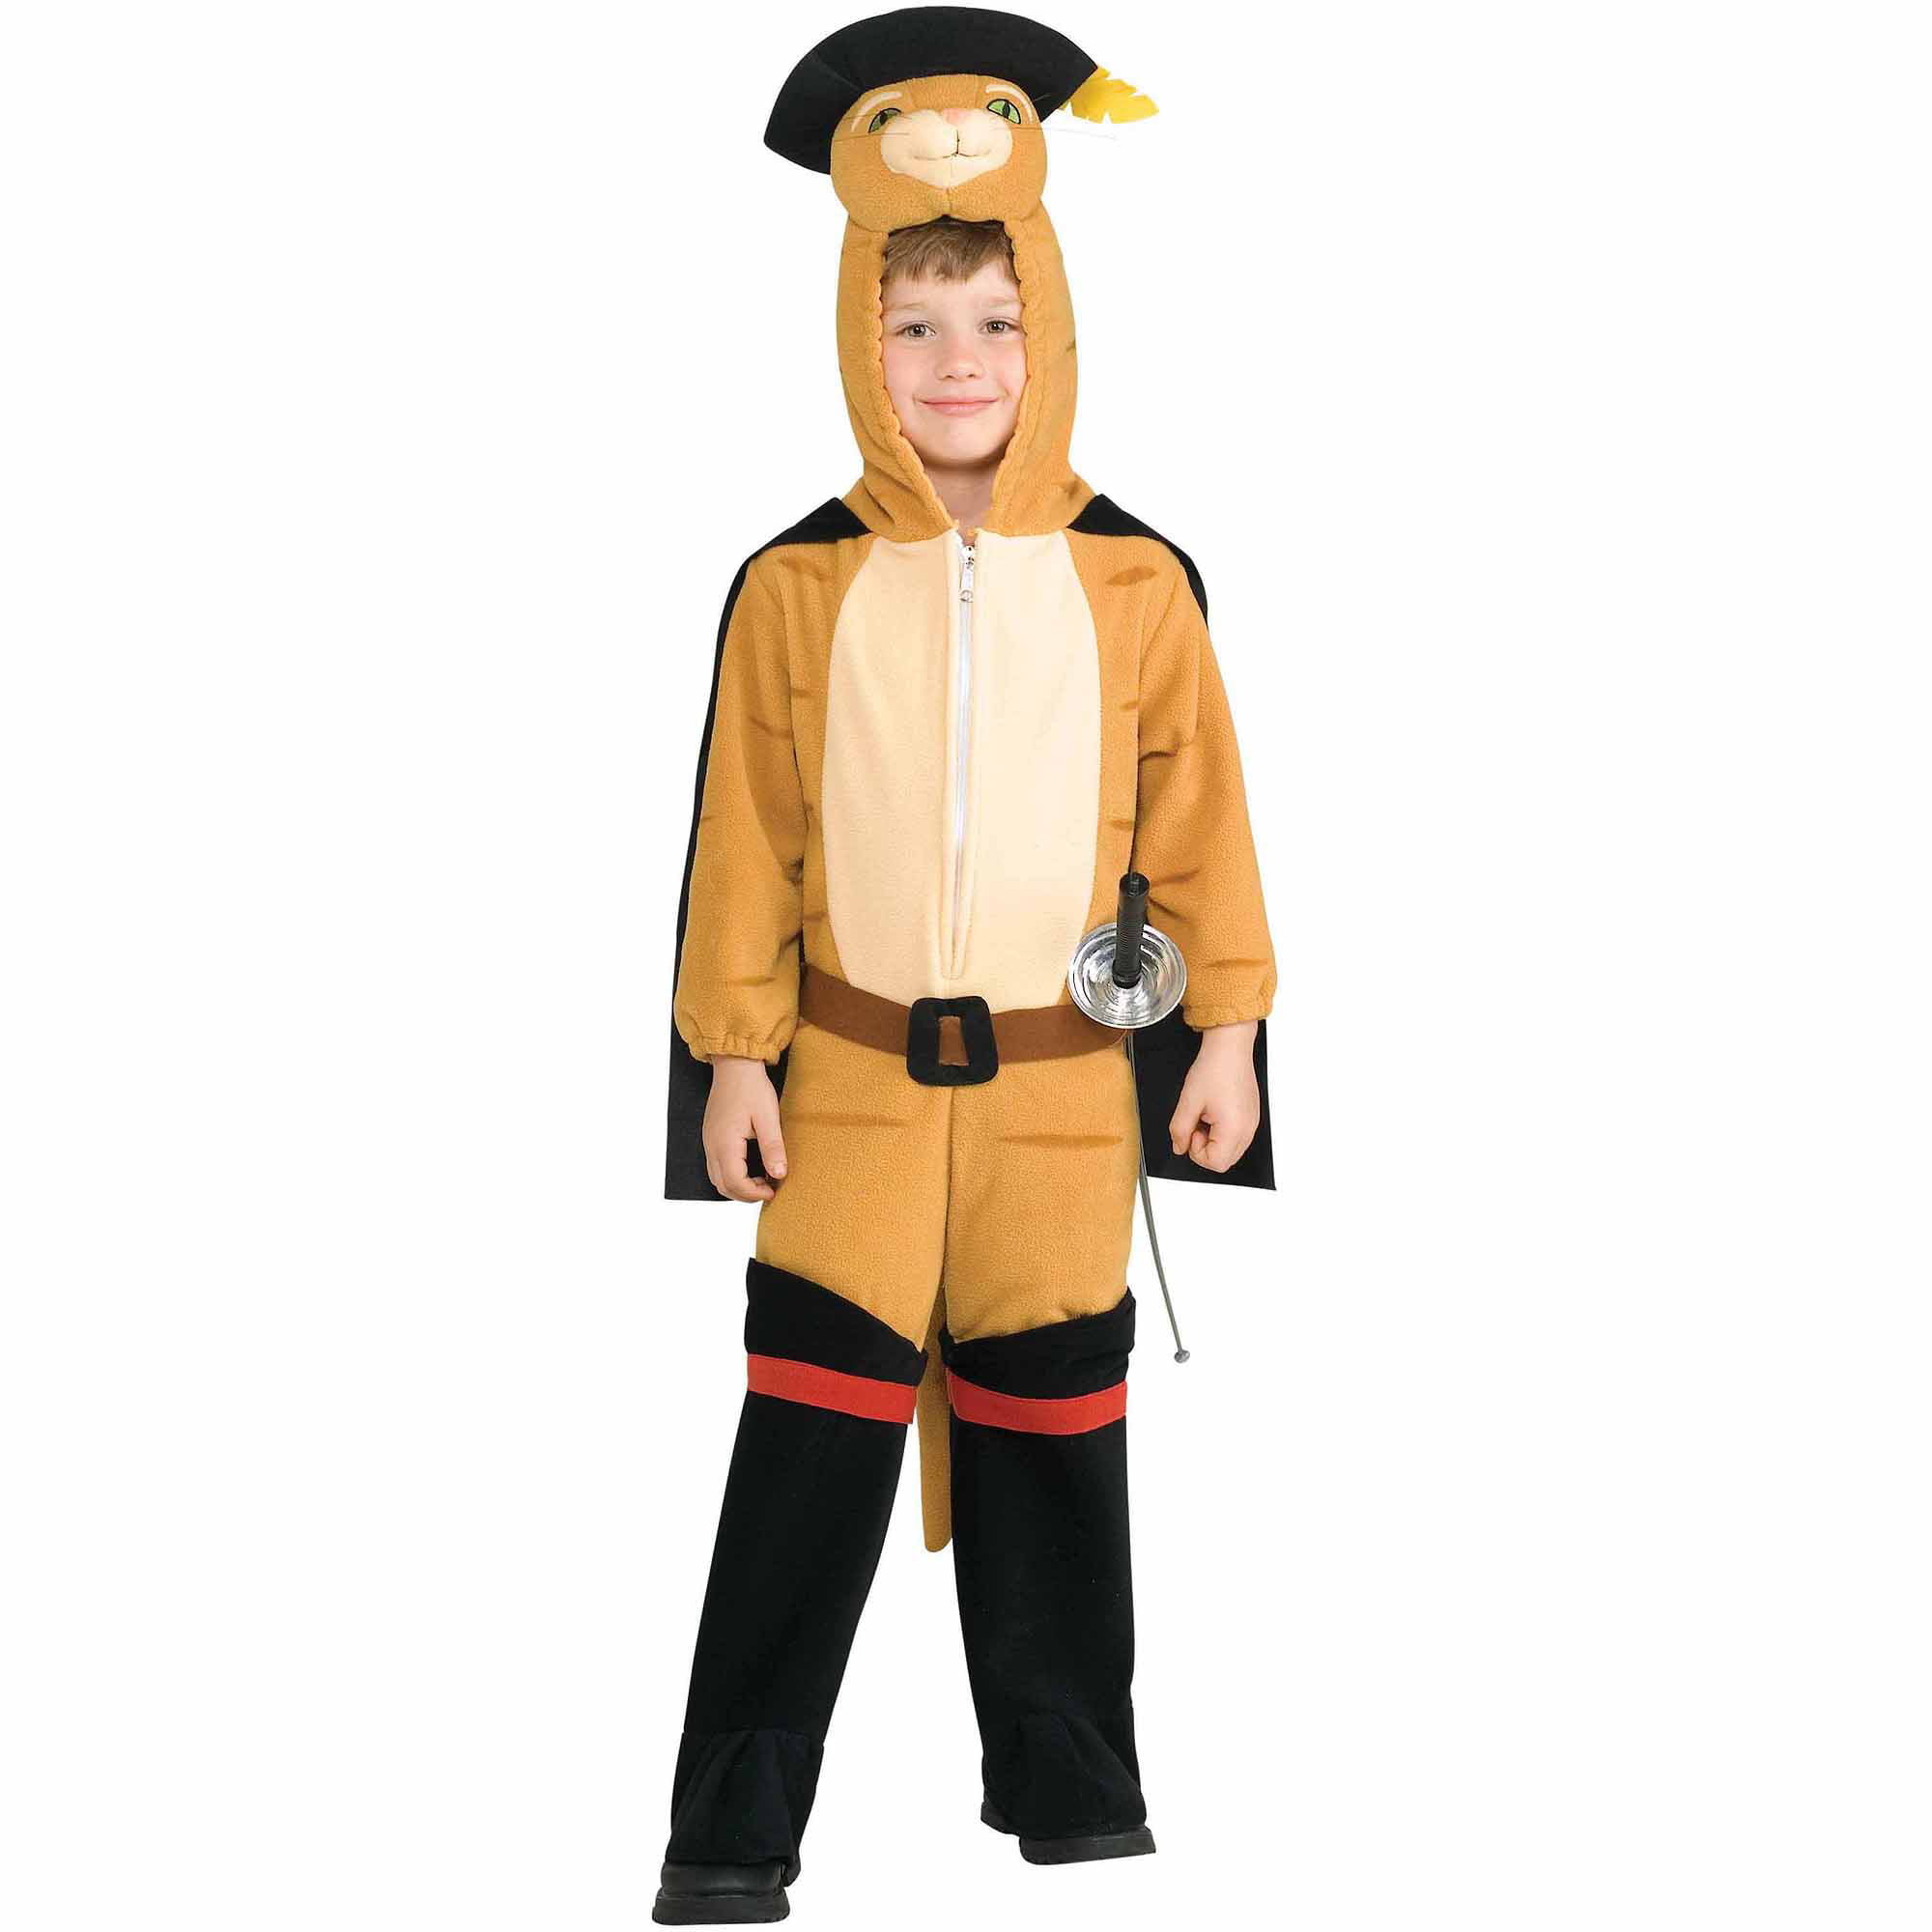 Boots Child Halloween Costume - Walmart. puss in boots fancy dress. 